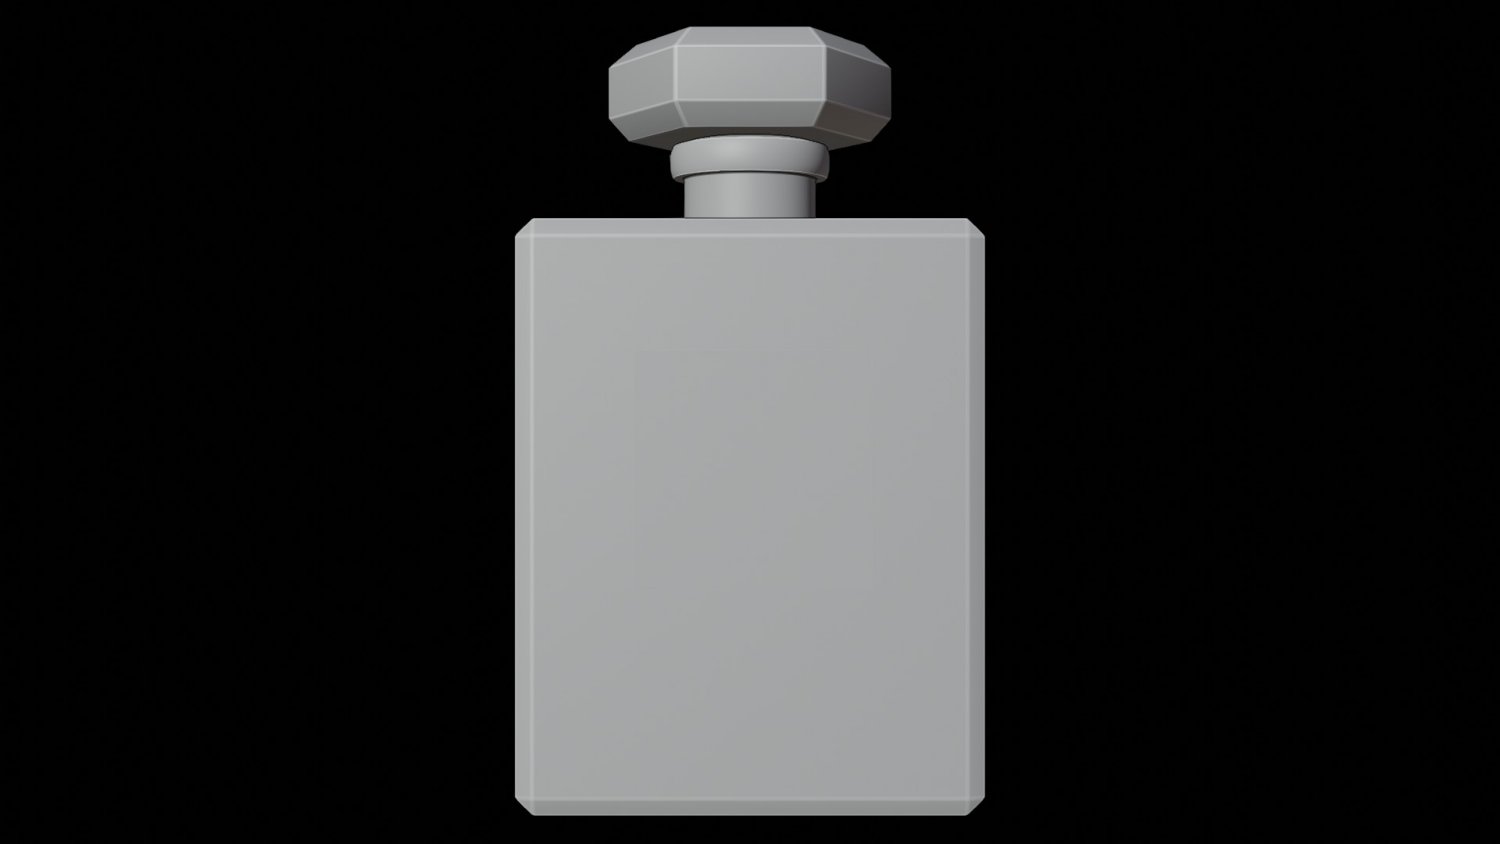 Chanel N5 Perfume Bottle with Studio | 3D model